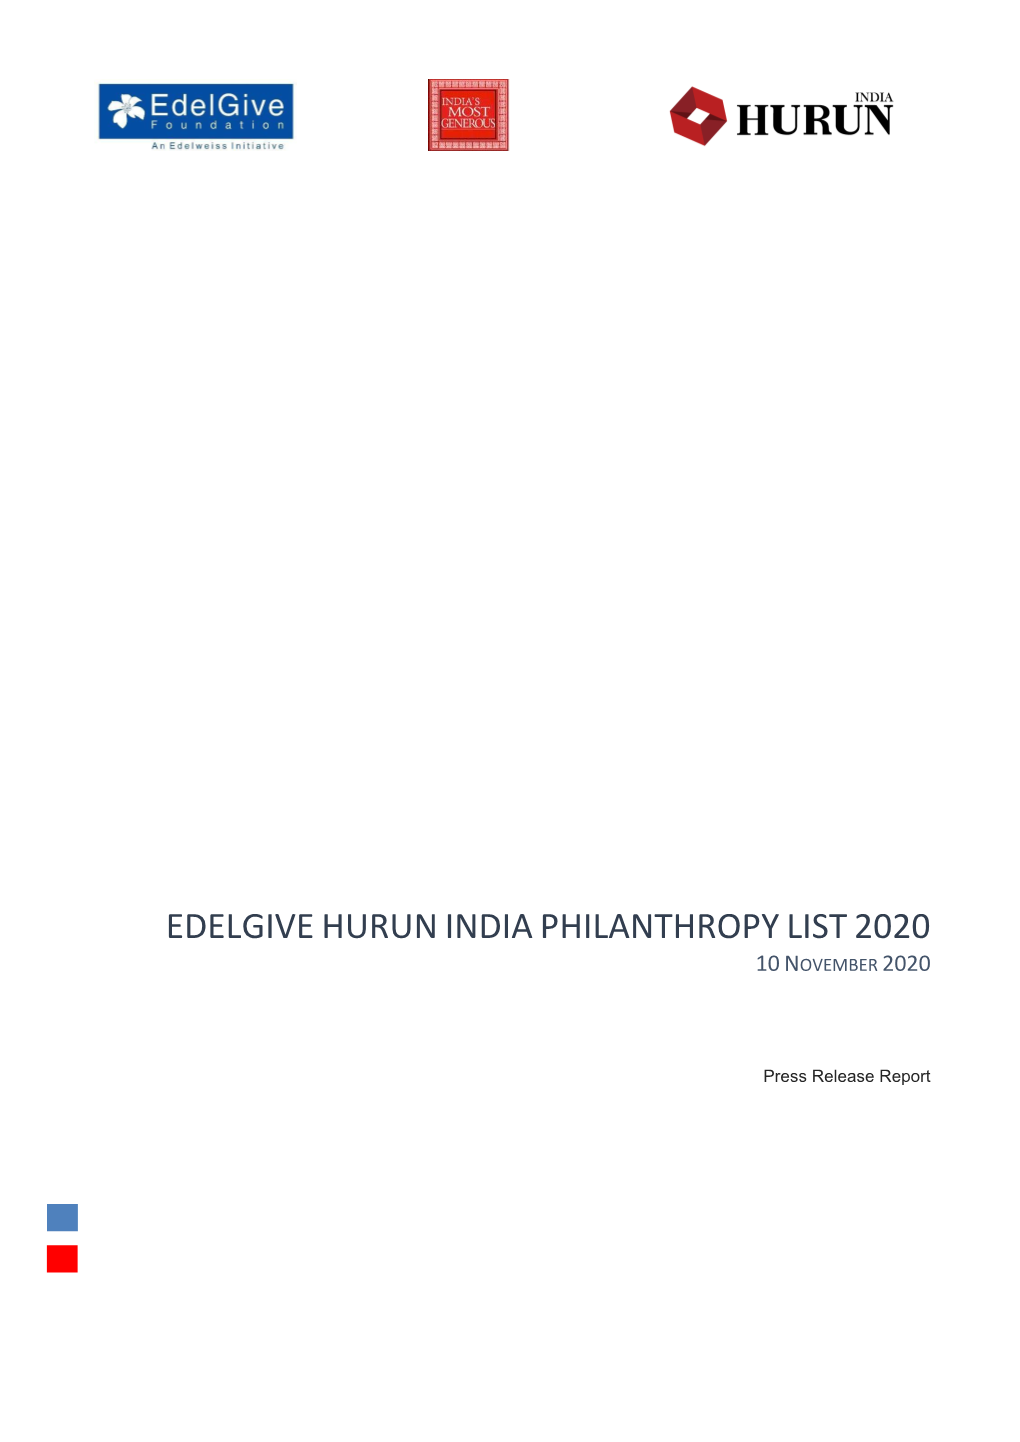 Edelgive Hurun India Philanthropy List 2020 10 November 2020